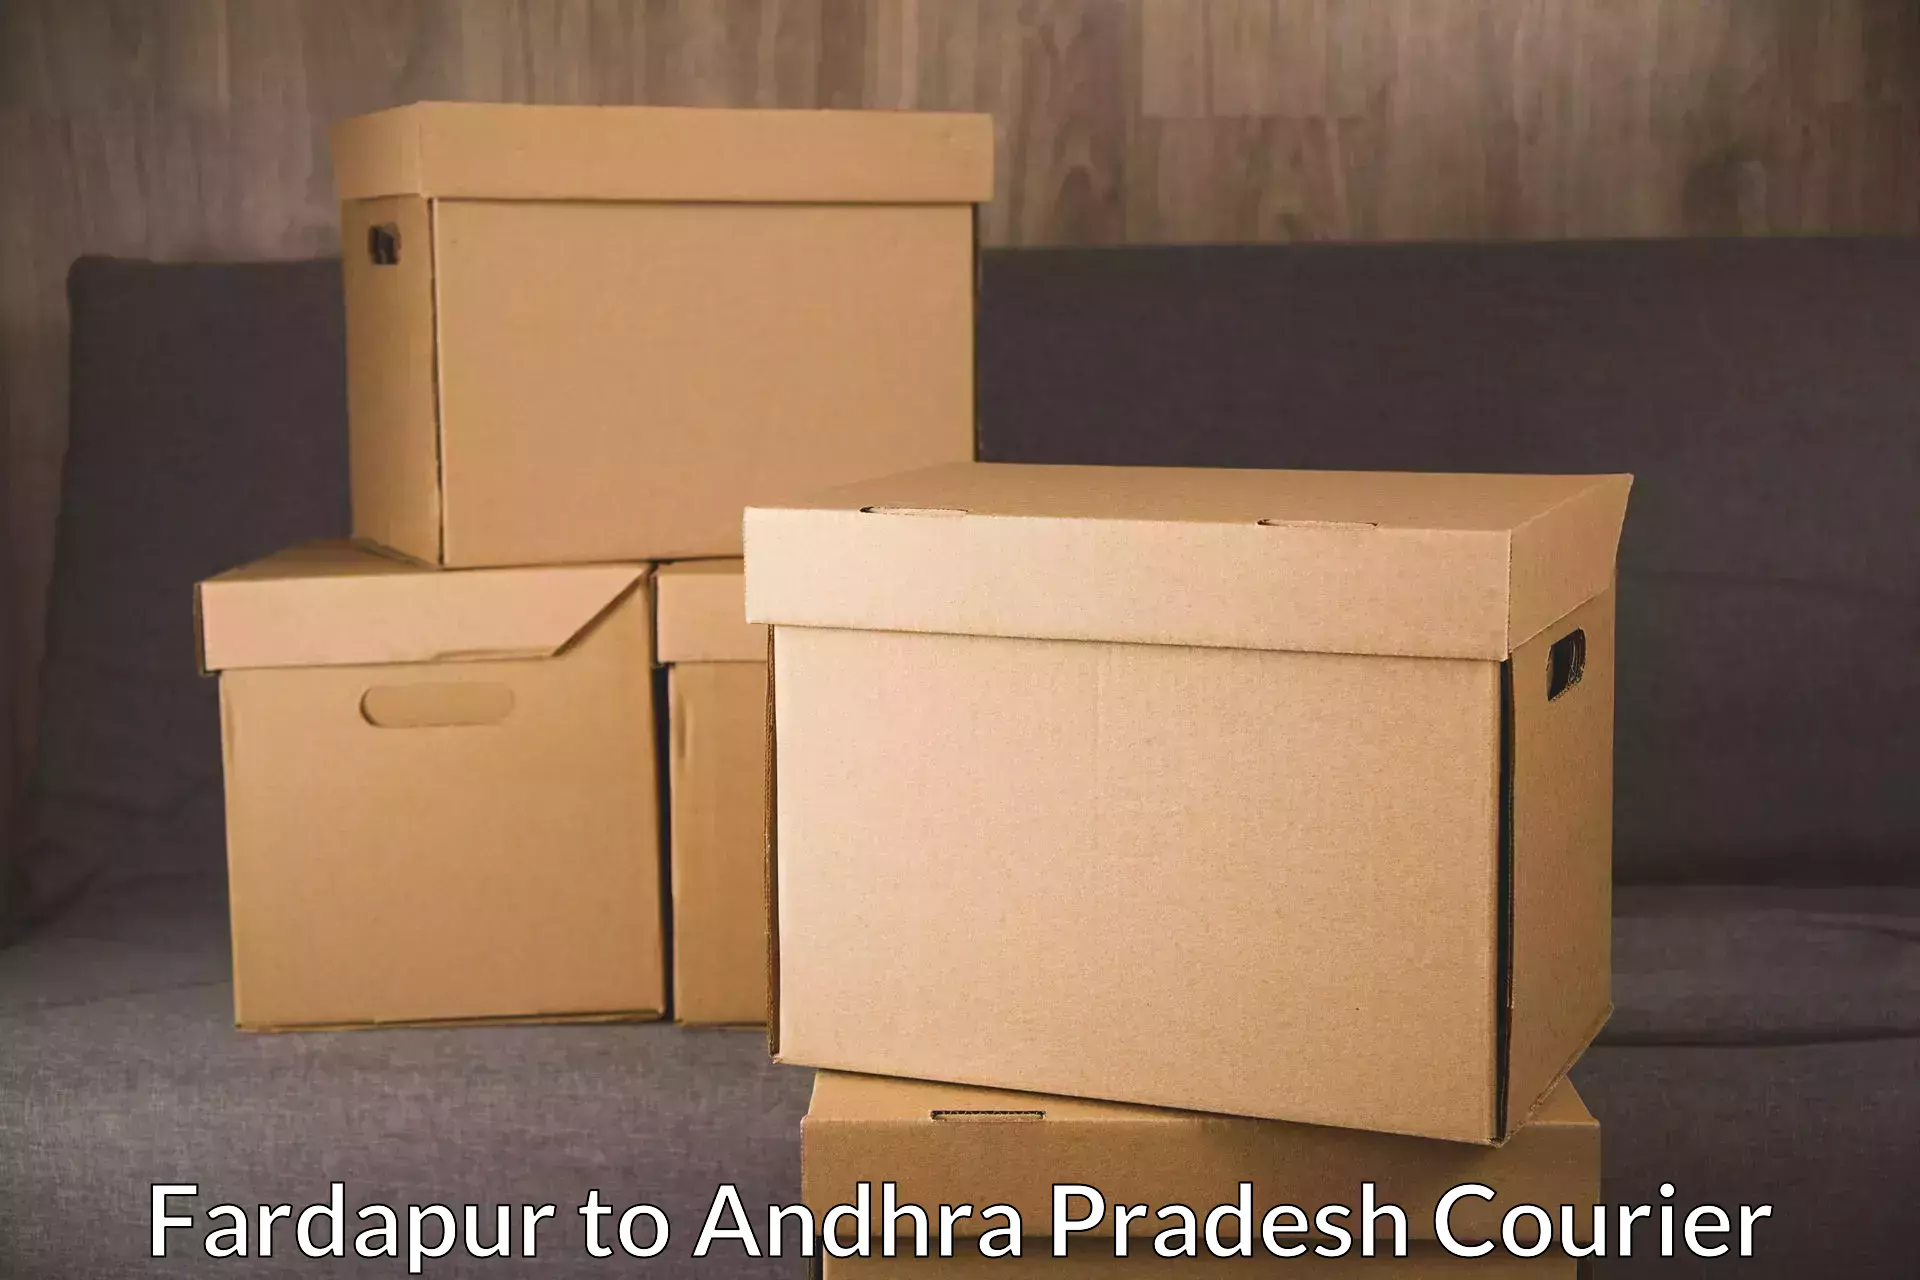 International courier networks Fardapur to Andhra Pradesh